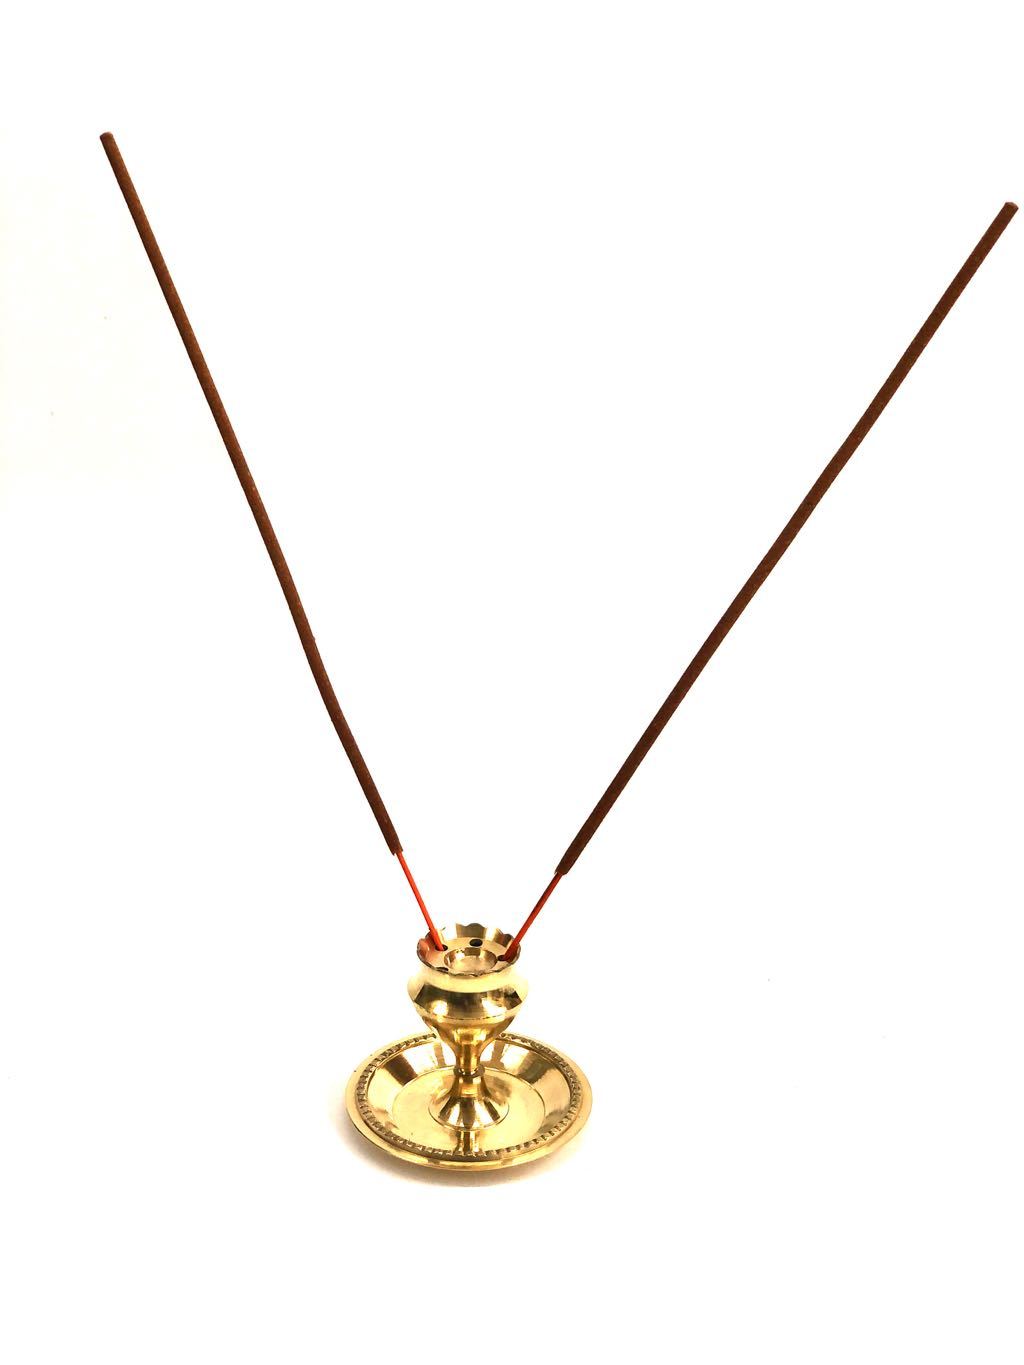 Incense Stick Holder Brass Various Shapes Pooja Decoration Tamrapatra